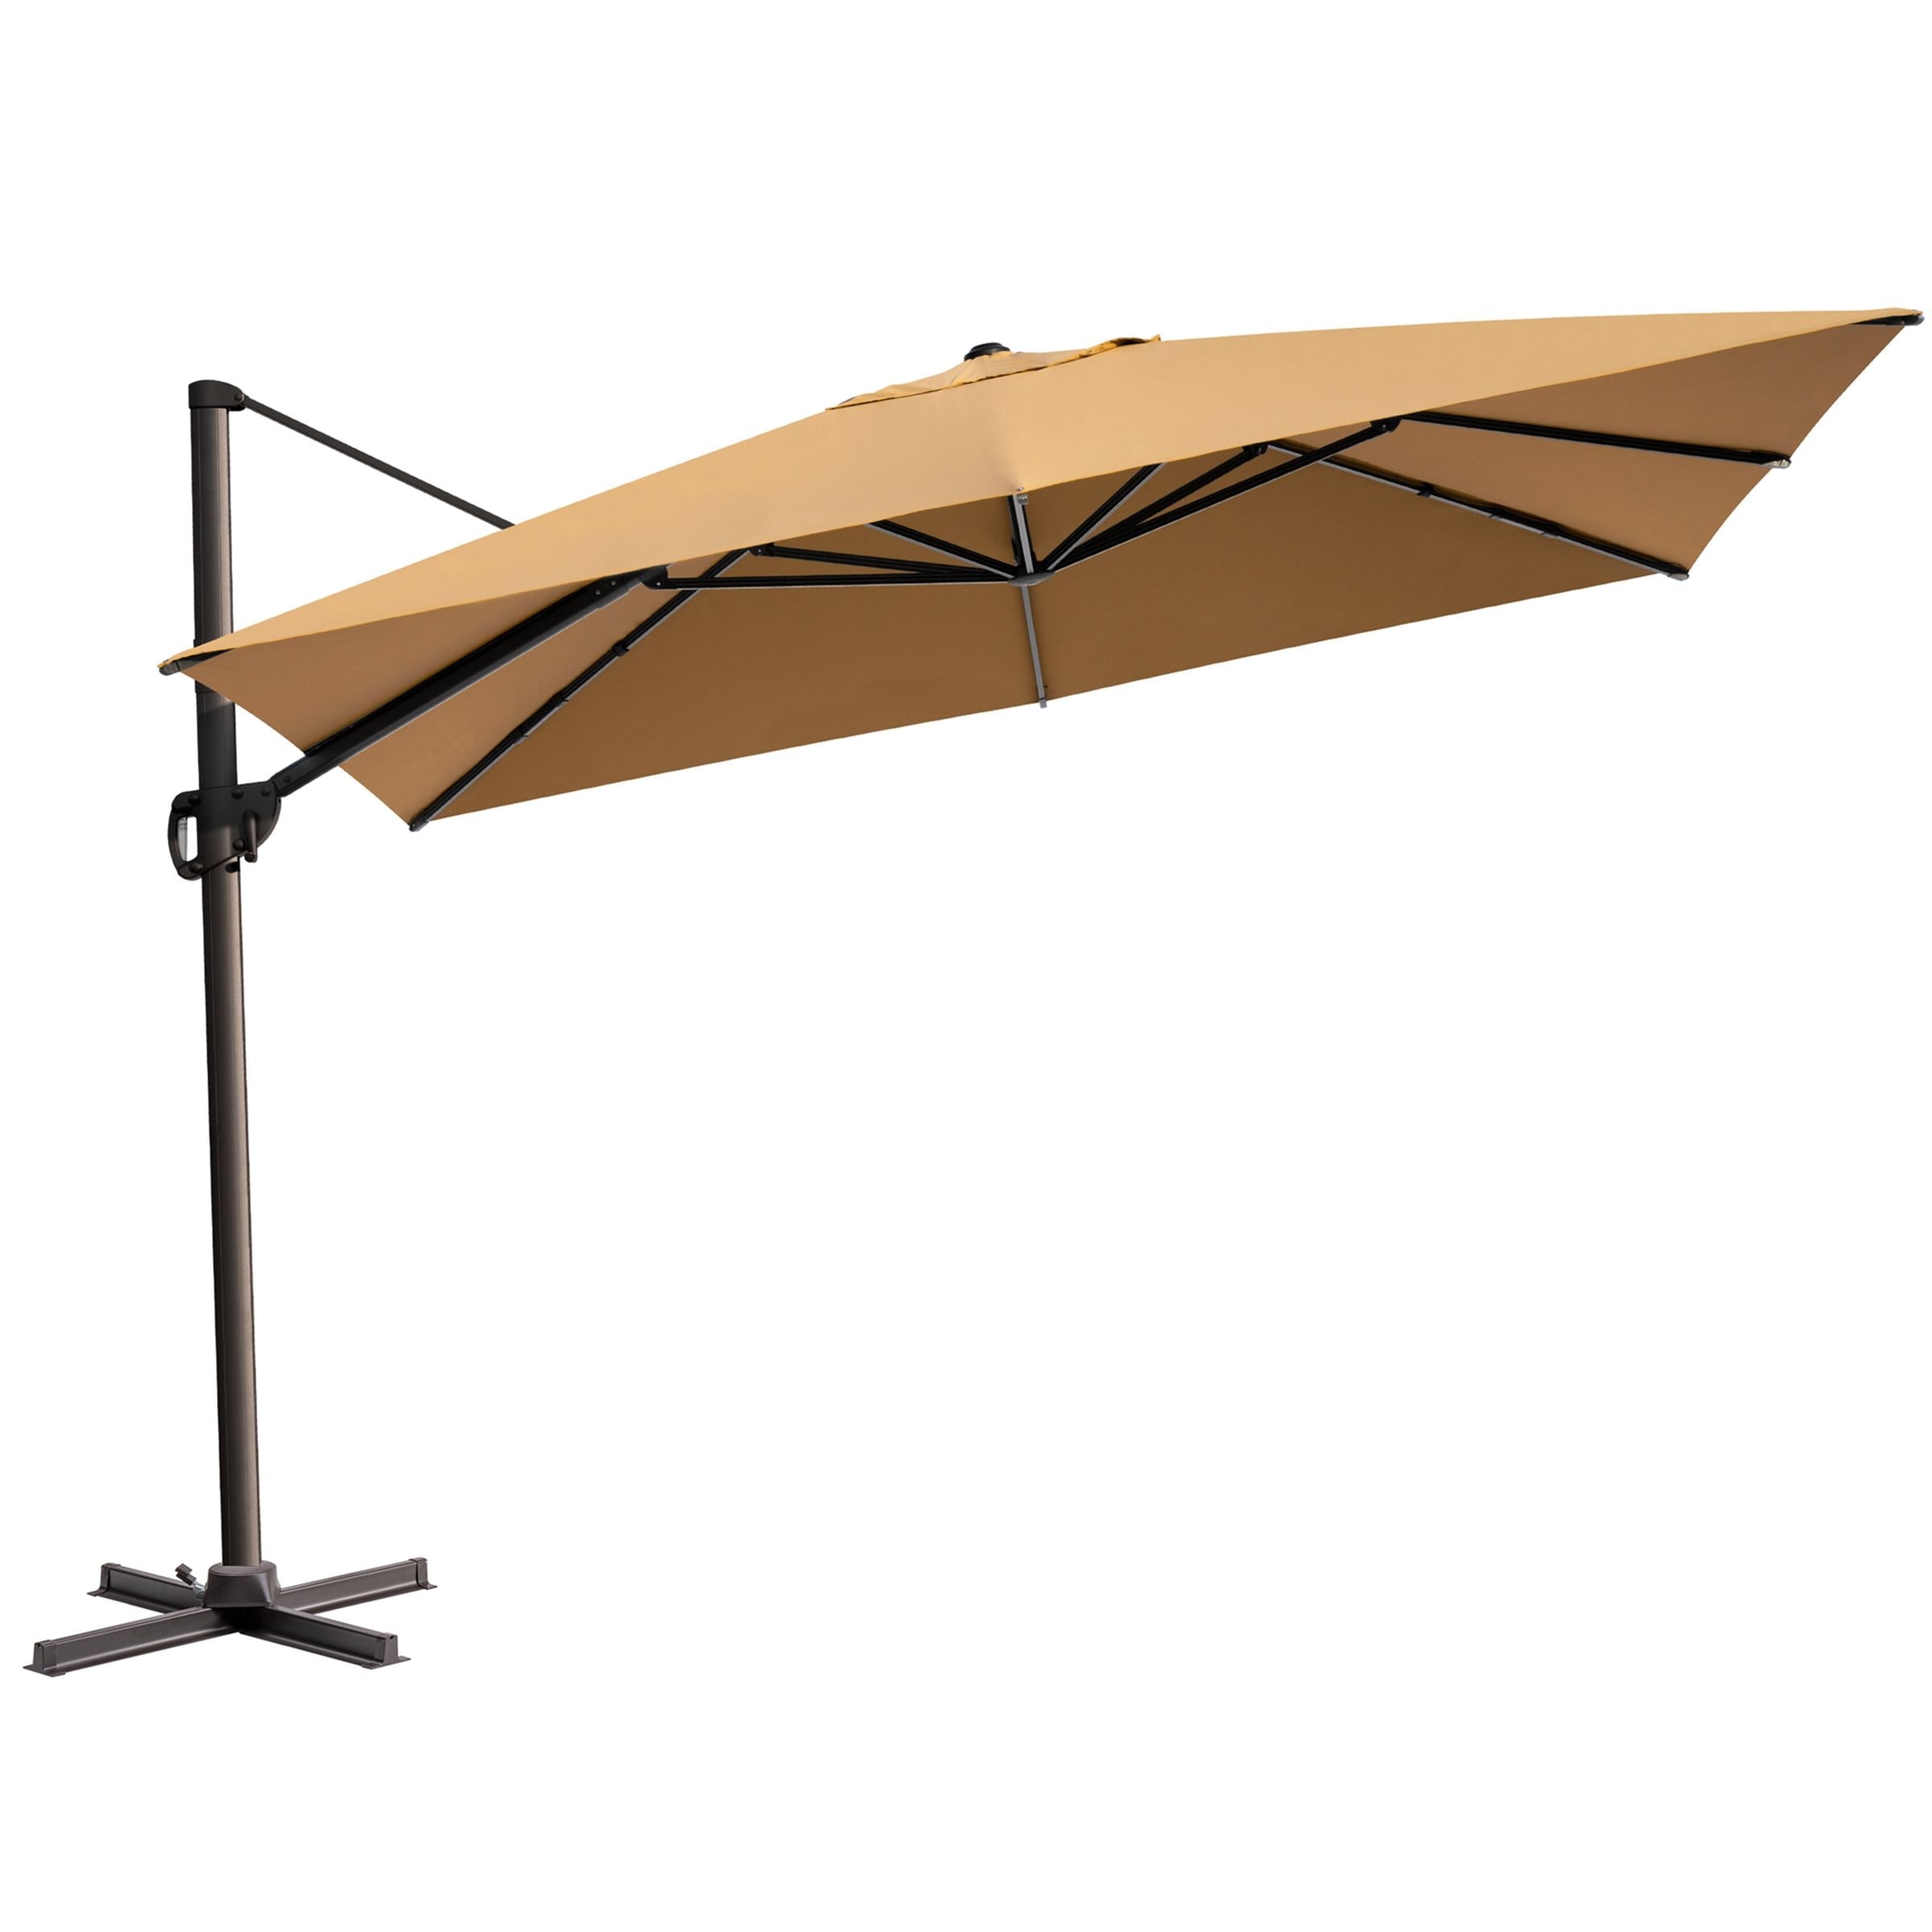 Crestlive Products 11 x 11ft Square Patio Cantilever Offset Umbrella